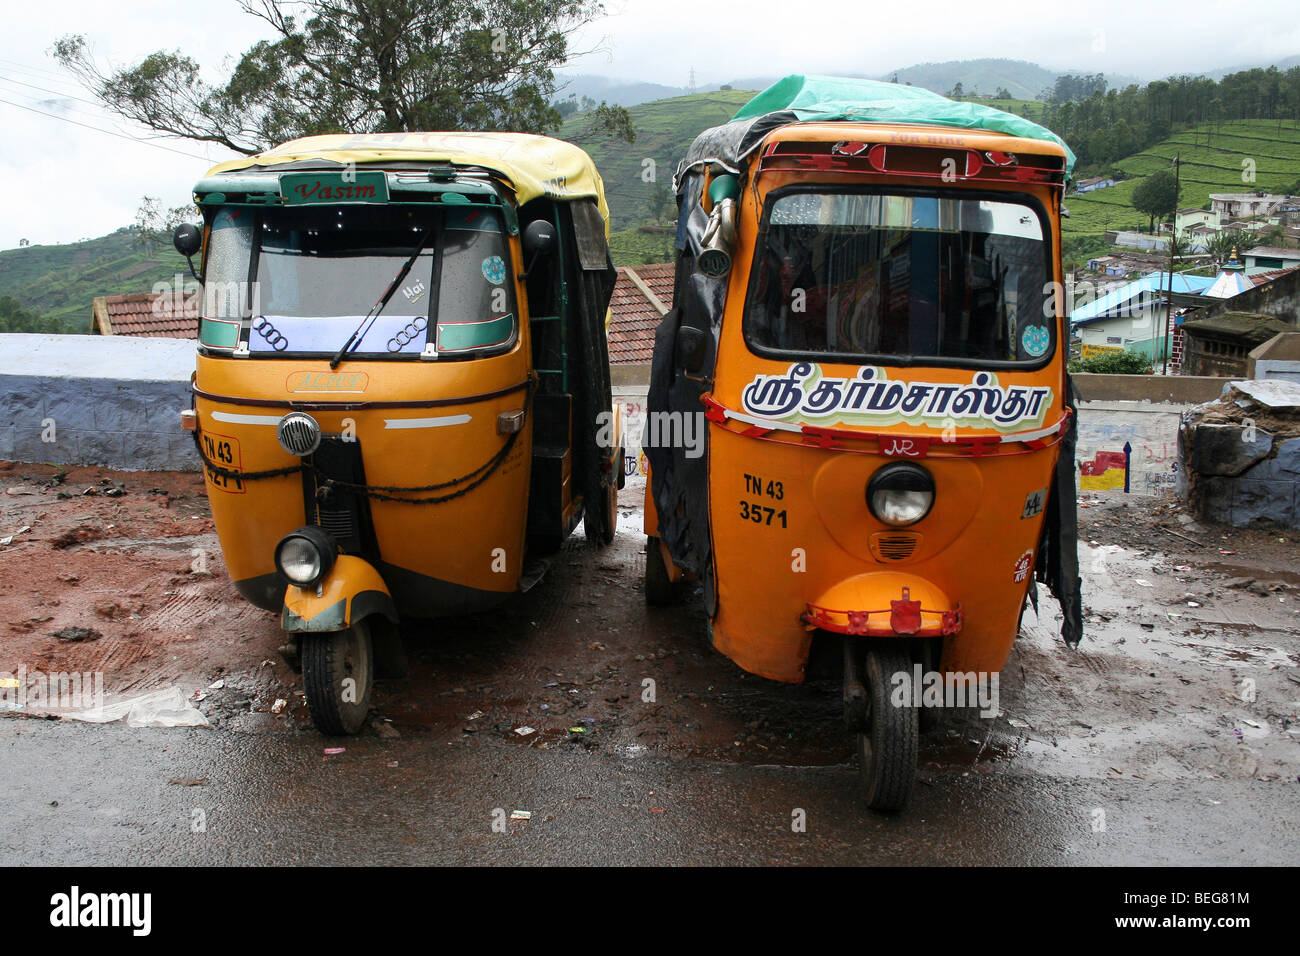 Two Tuc-tucs In A Kerala Street, India Stock Photo